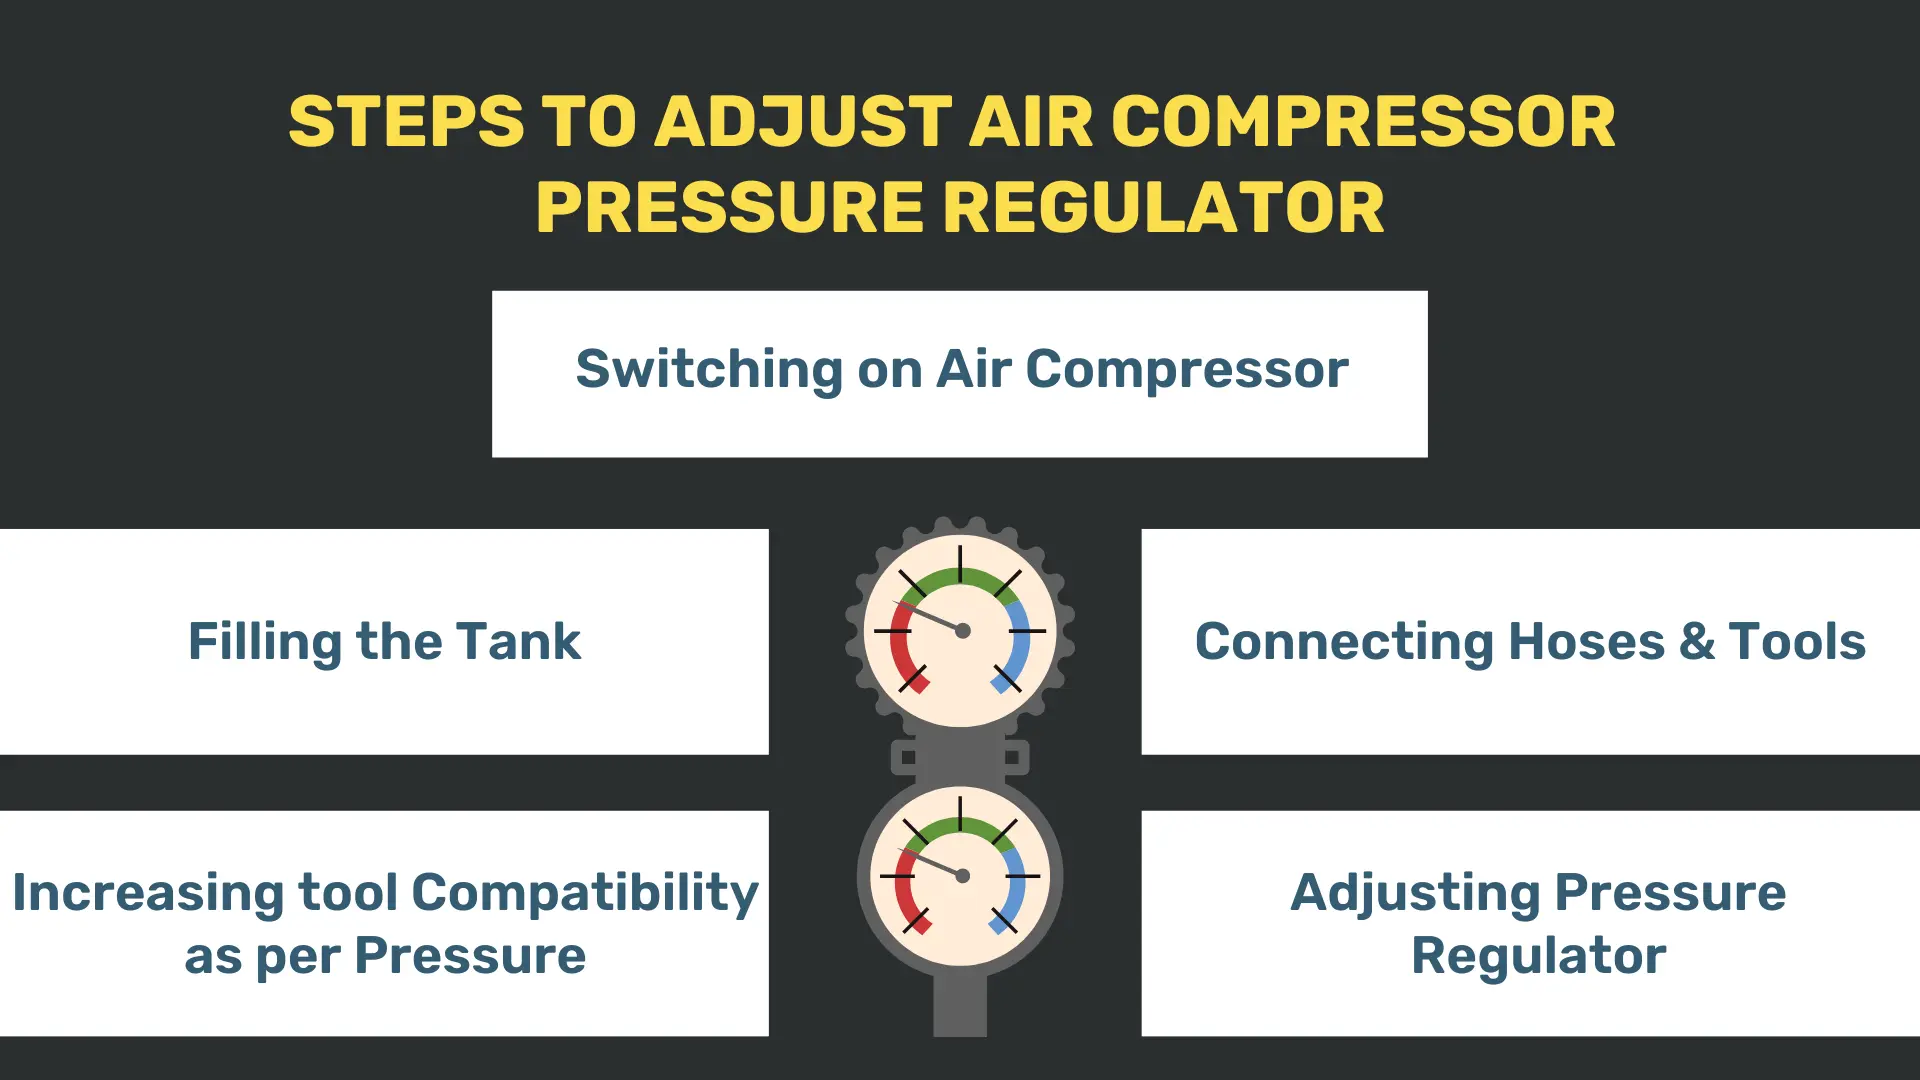 Steps to Adjust Air Compressor Pressure Regulator